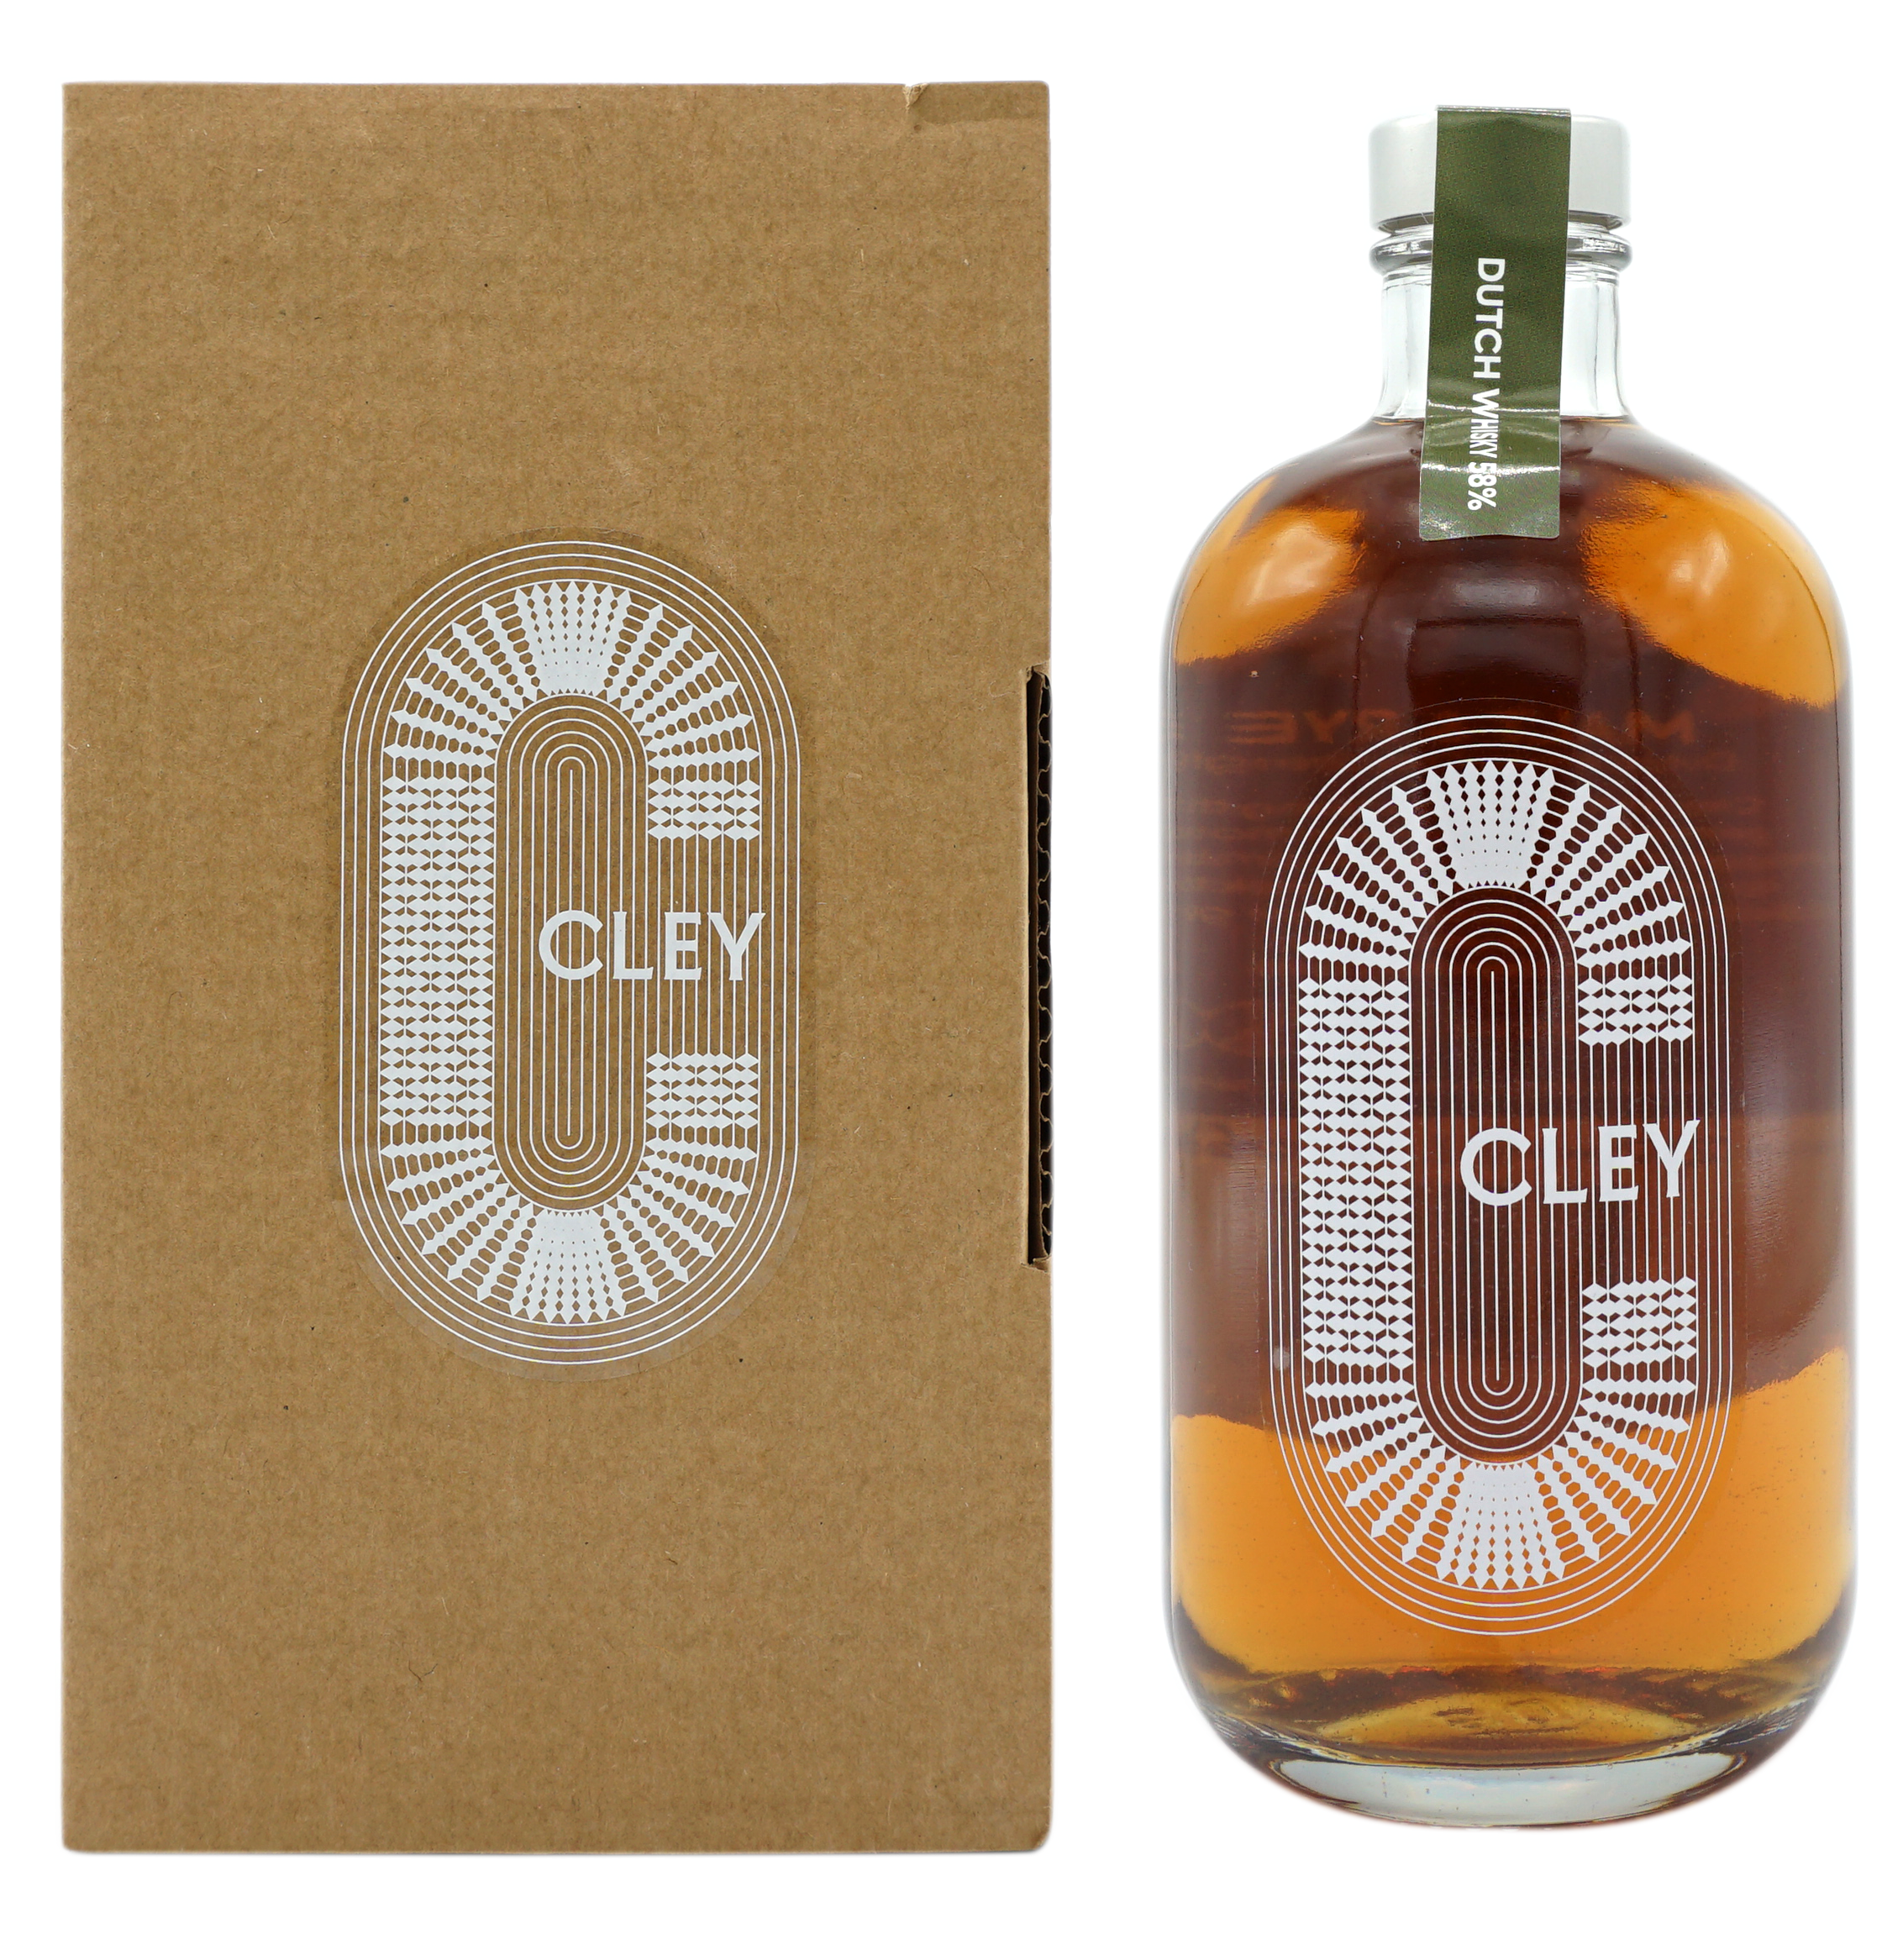 Cley Malt&Rye 58% Compleet